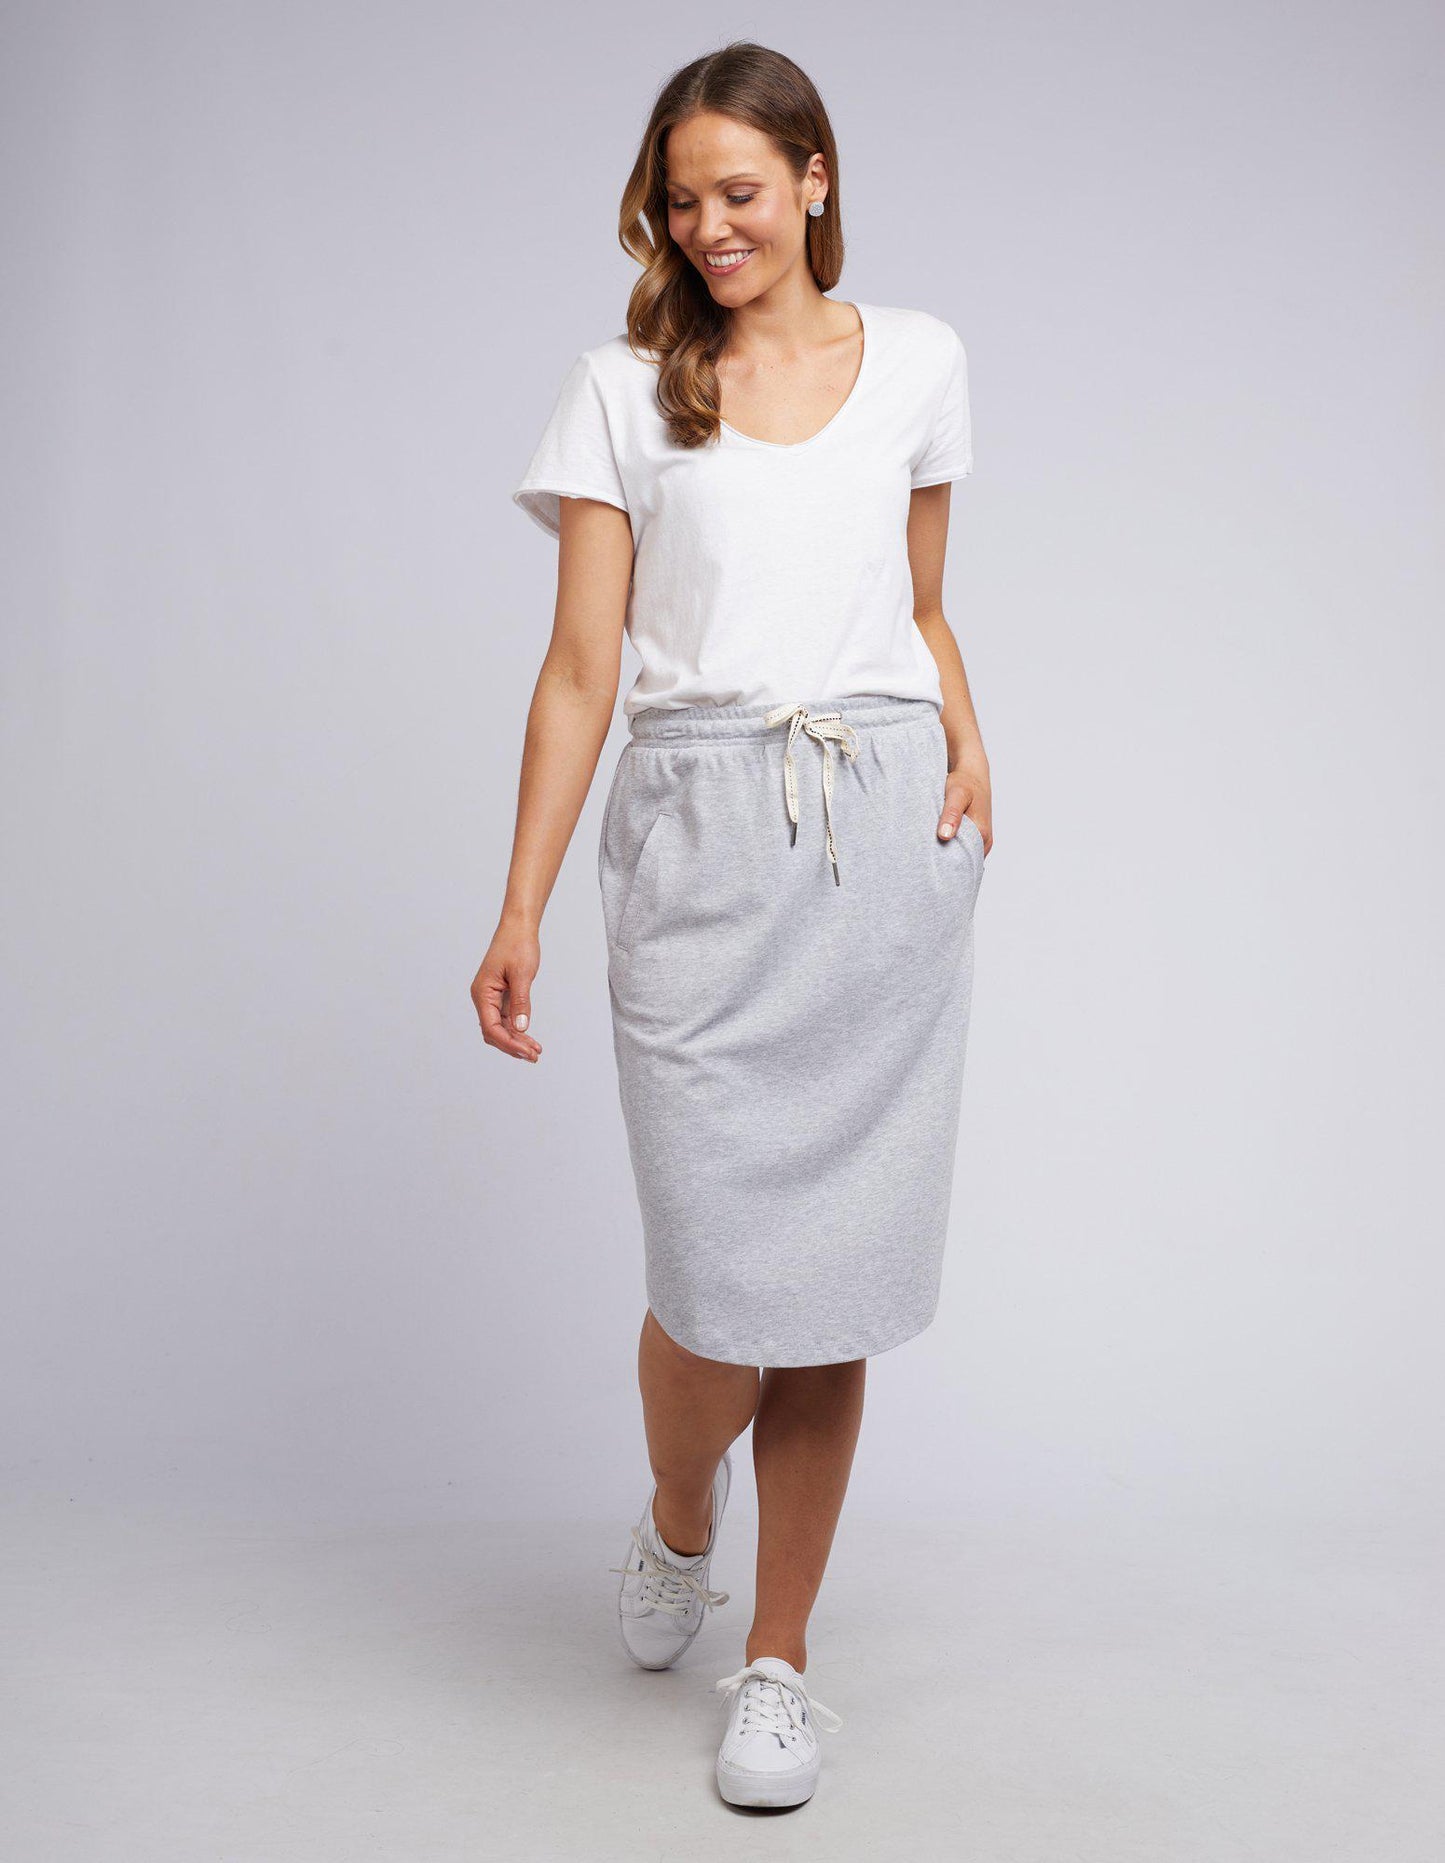 Fundamental Isla Skirt - Grey Marle - Elm Lifestyle - FUDGE Gifts Home Lifestyle